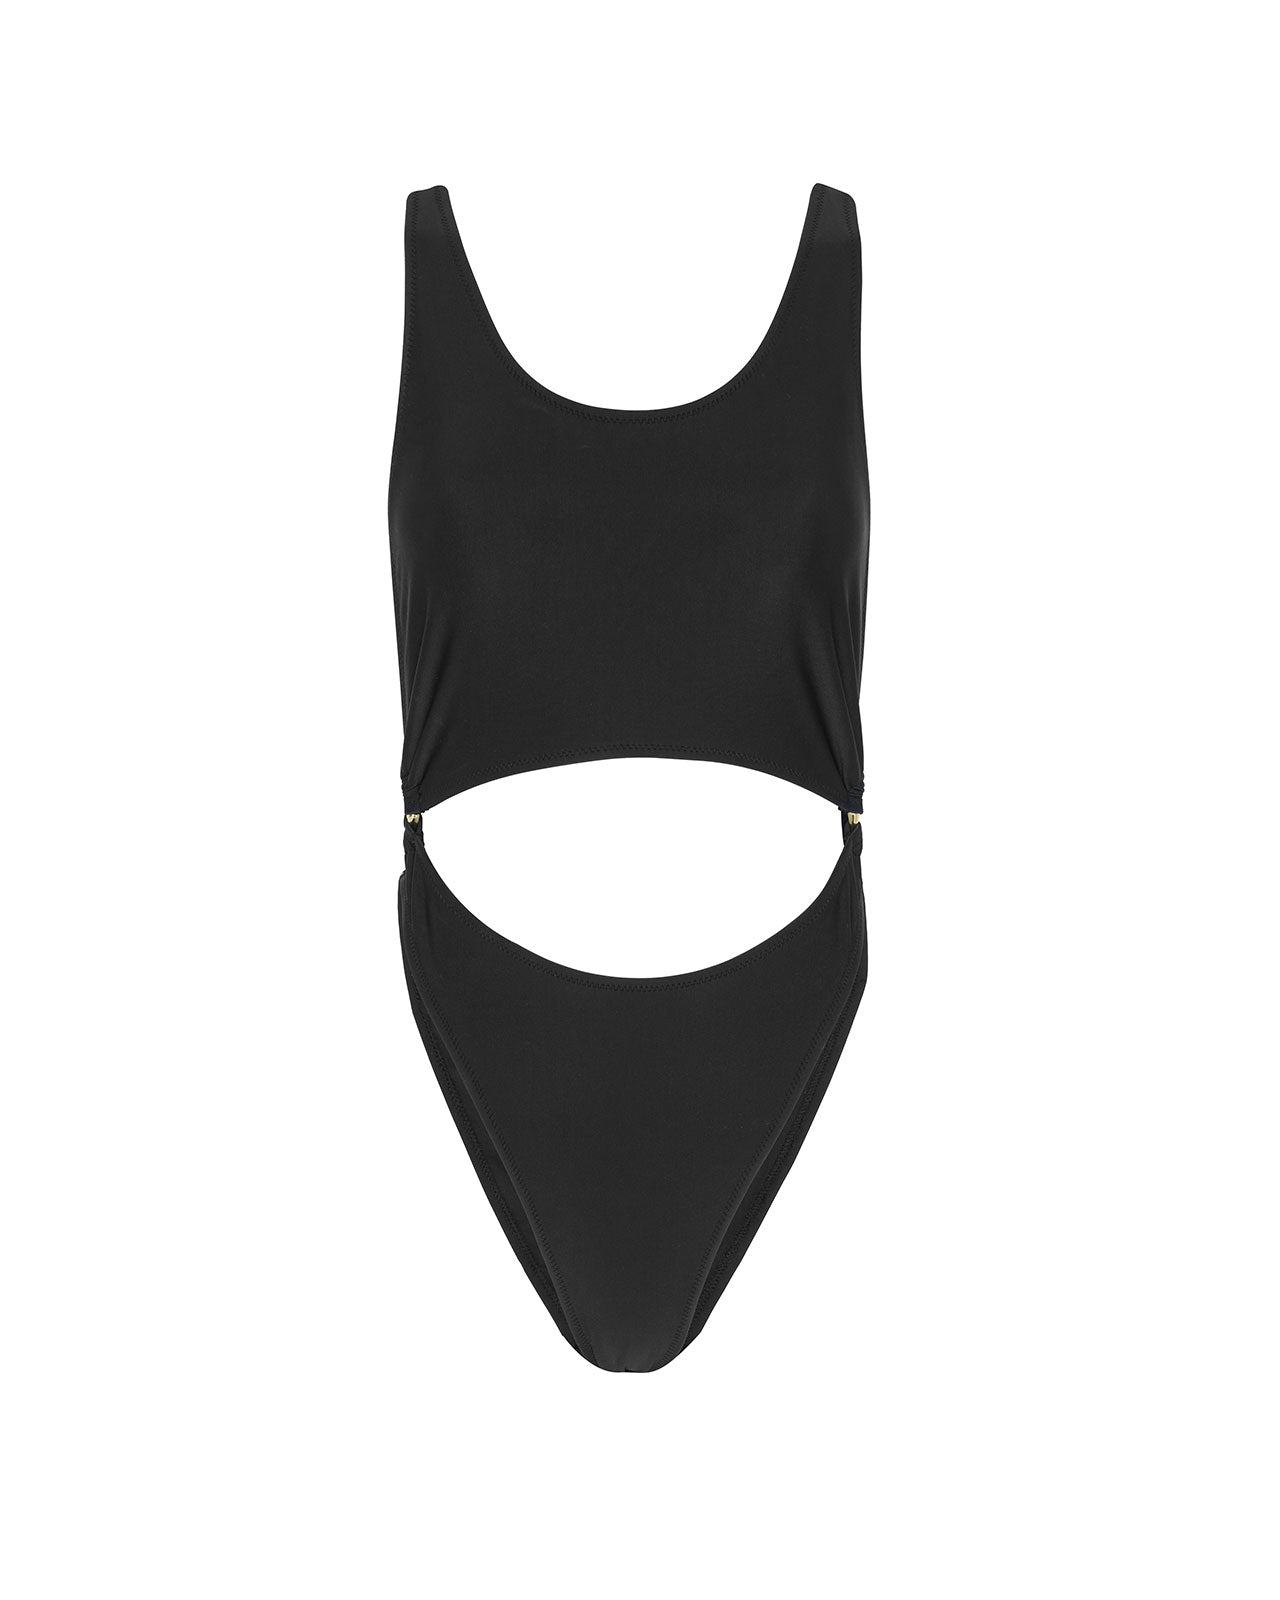 Brandon Blackwood New York - Cutout One-Piece Swimsuit - Black